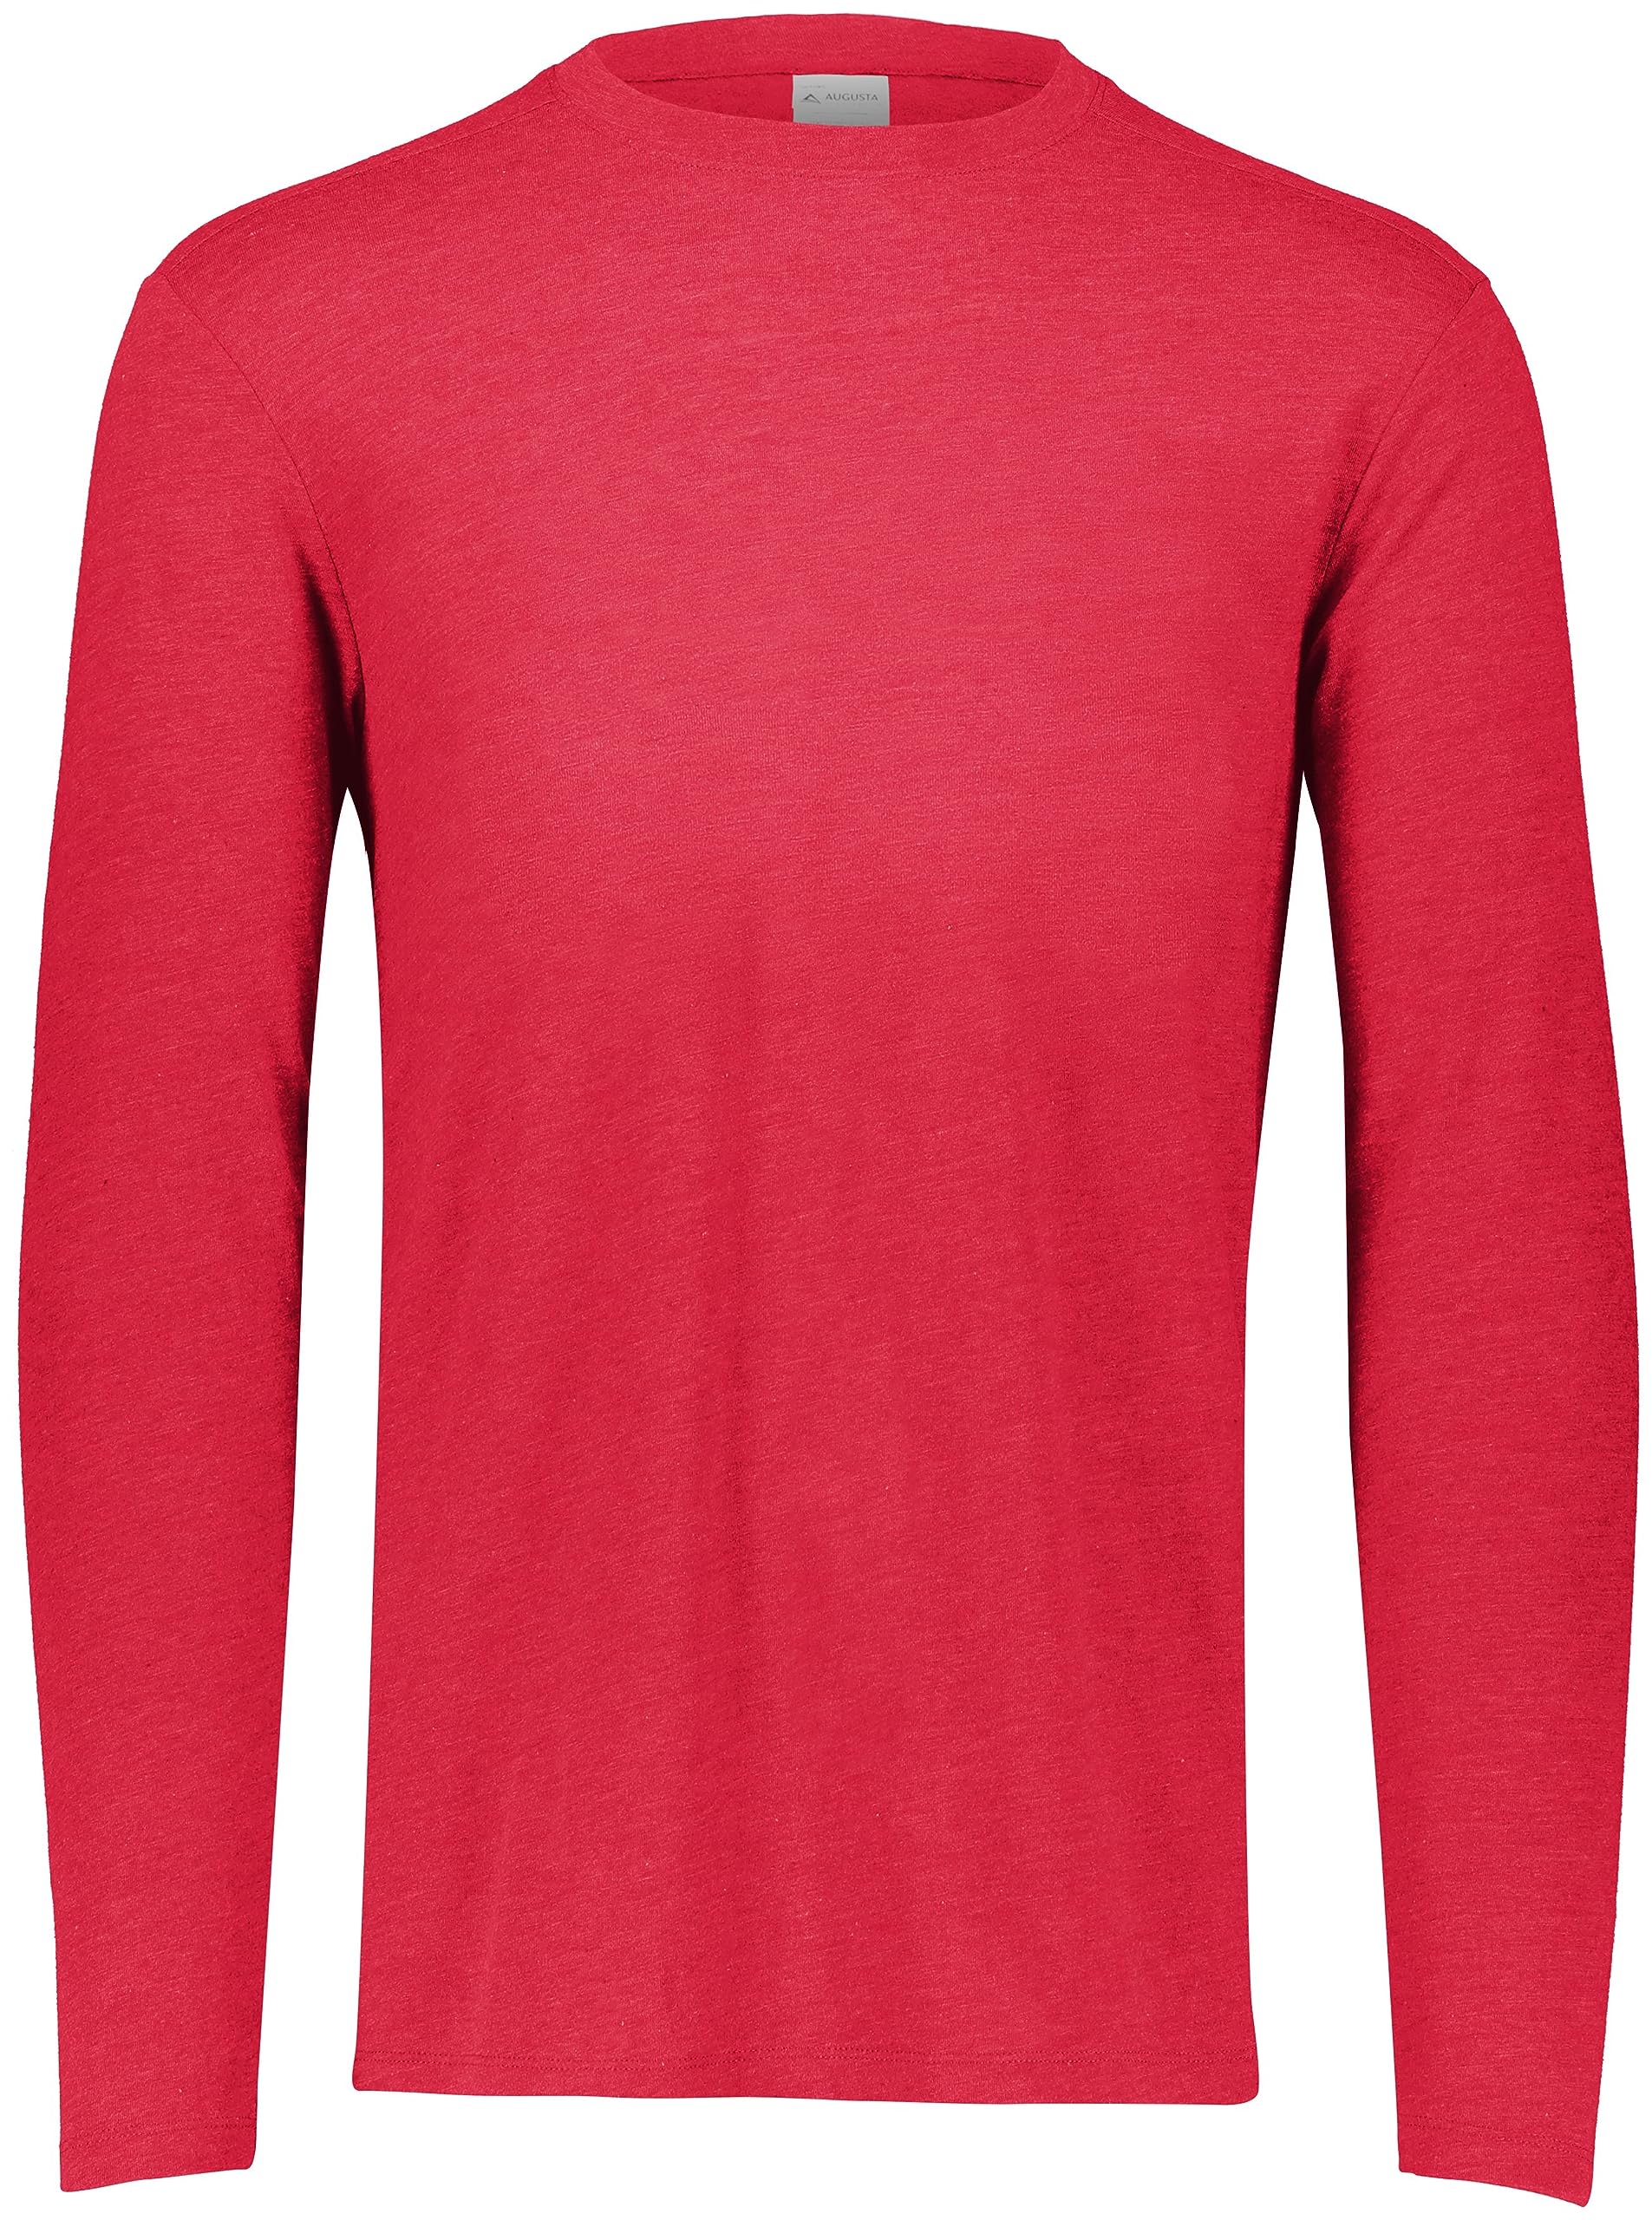 Augusta Sportswear Boys Tri-Blend Long Sleeve Crew, Red Heather, M